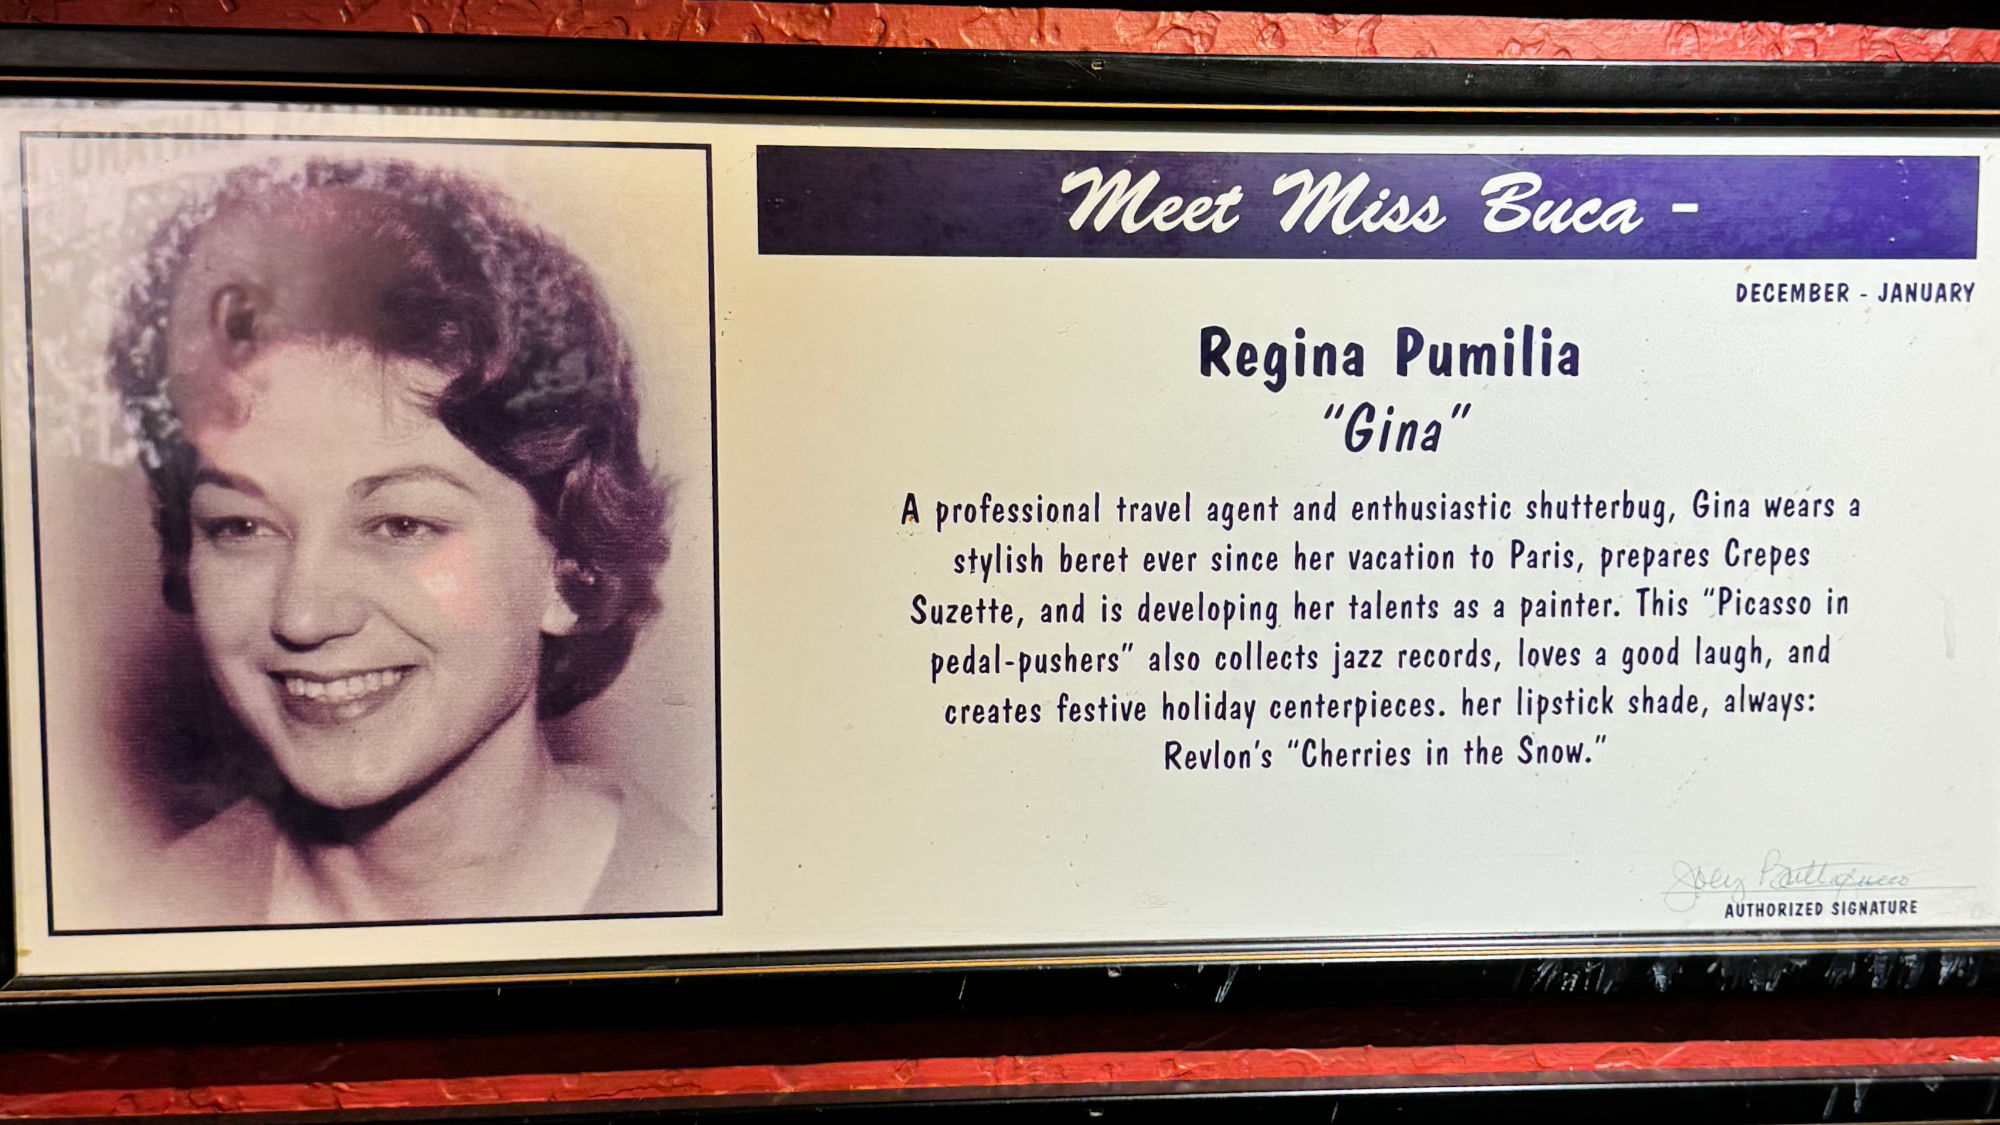 Meet Miss Buca Regina Pumilia